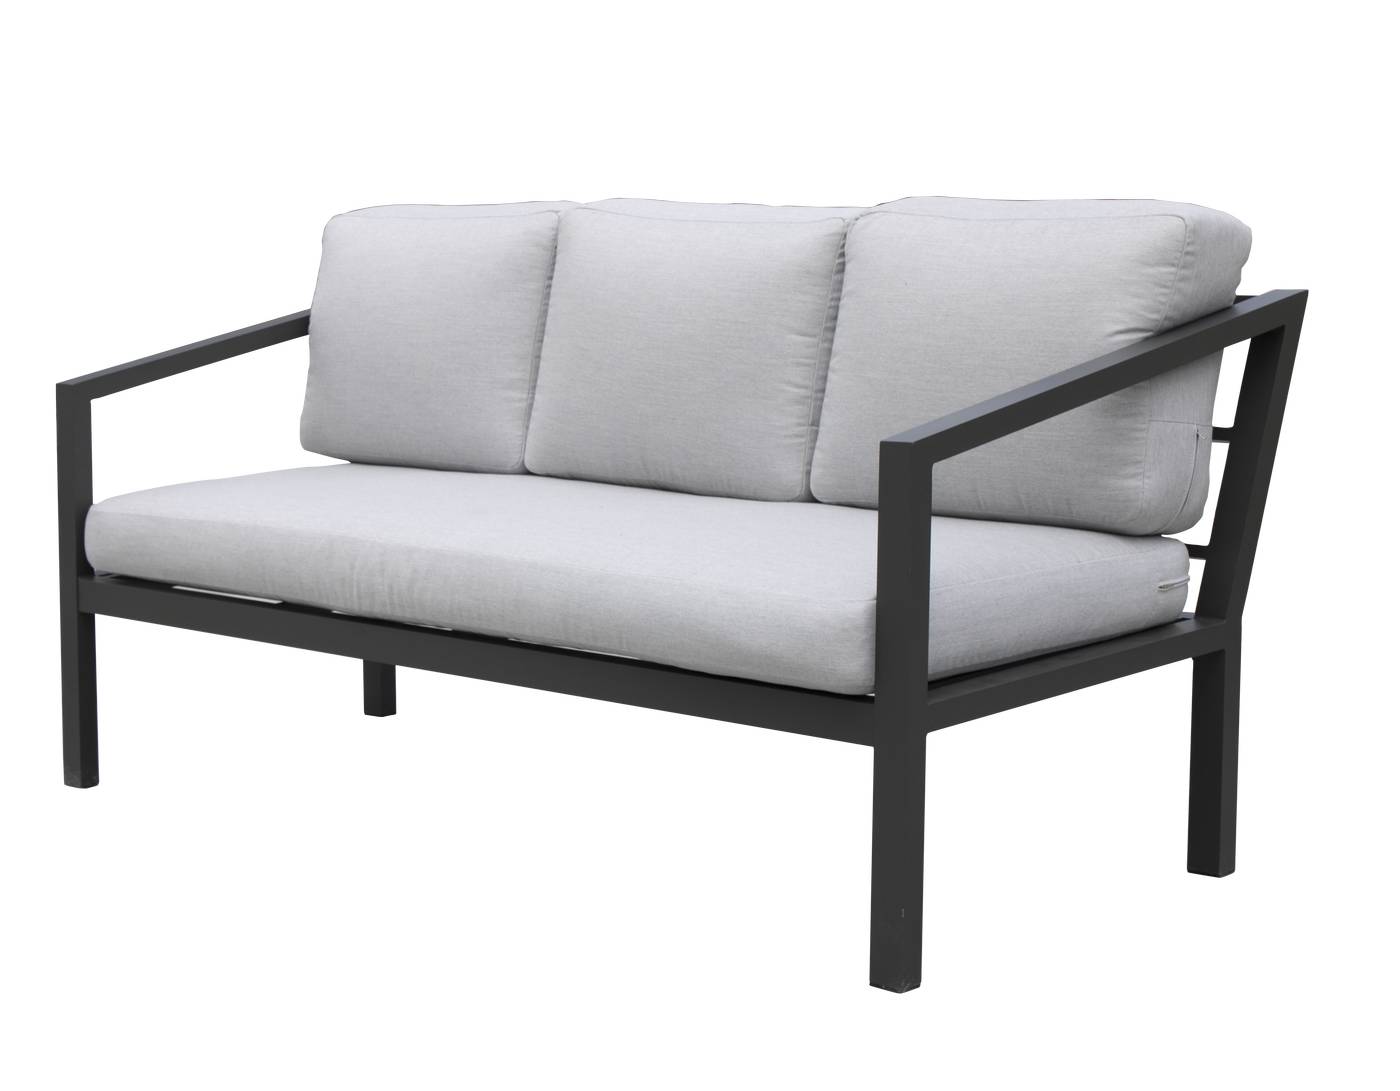 Set Aluminio Oregón-10 - Conjunto de aluminio: sofá de 3 plazas + 2 sillones + 1 mesa de centro + 2 reposapiés. Colores blanco, antracita, marrón, champagne o plata.